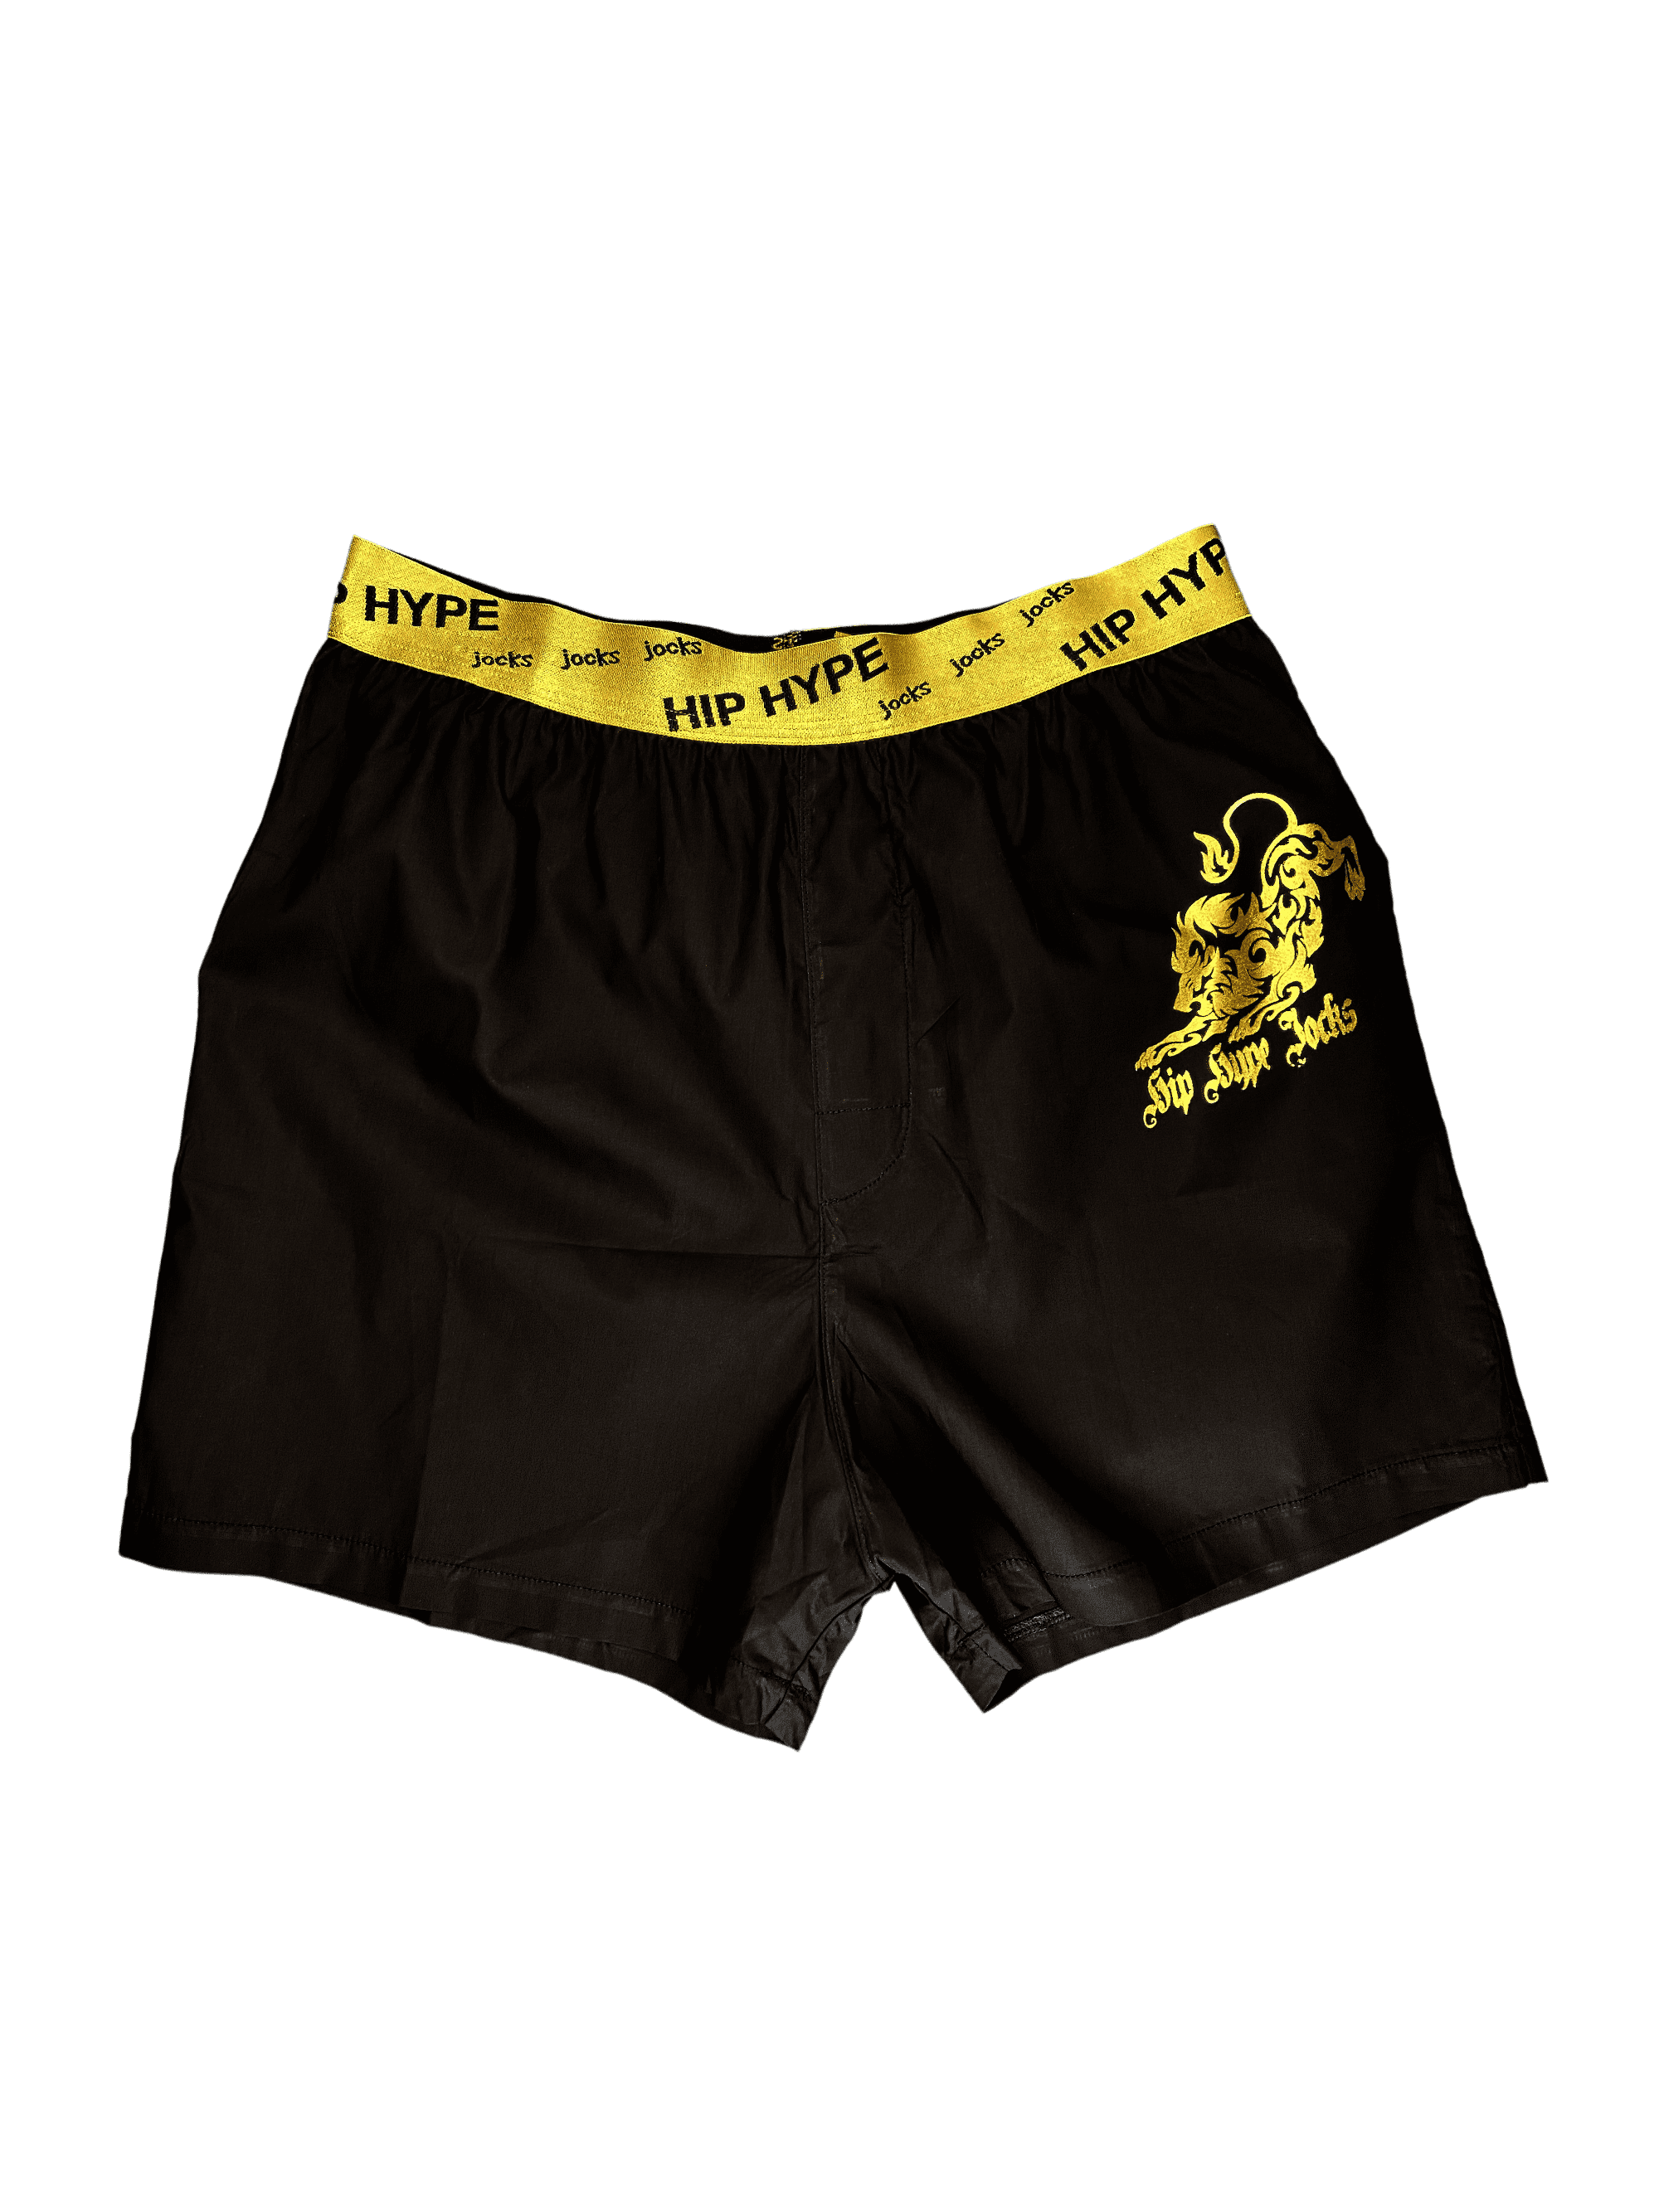 Hip Hype Jocks Men Boxer Brief Underwear Soft Cotton Comfortable Breathable  Tag Free Designer Waistband, Workout Boxer Men's